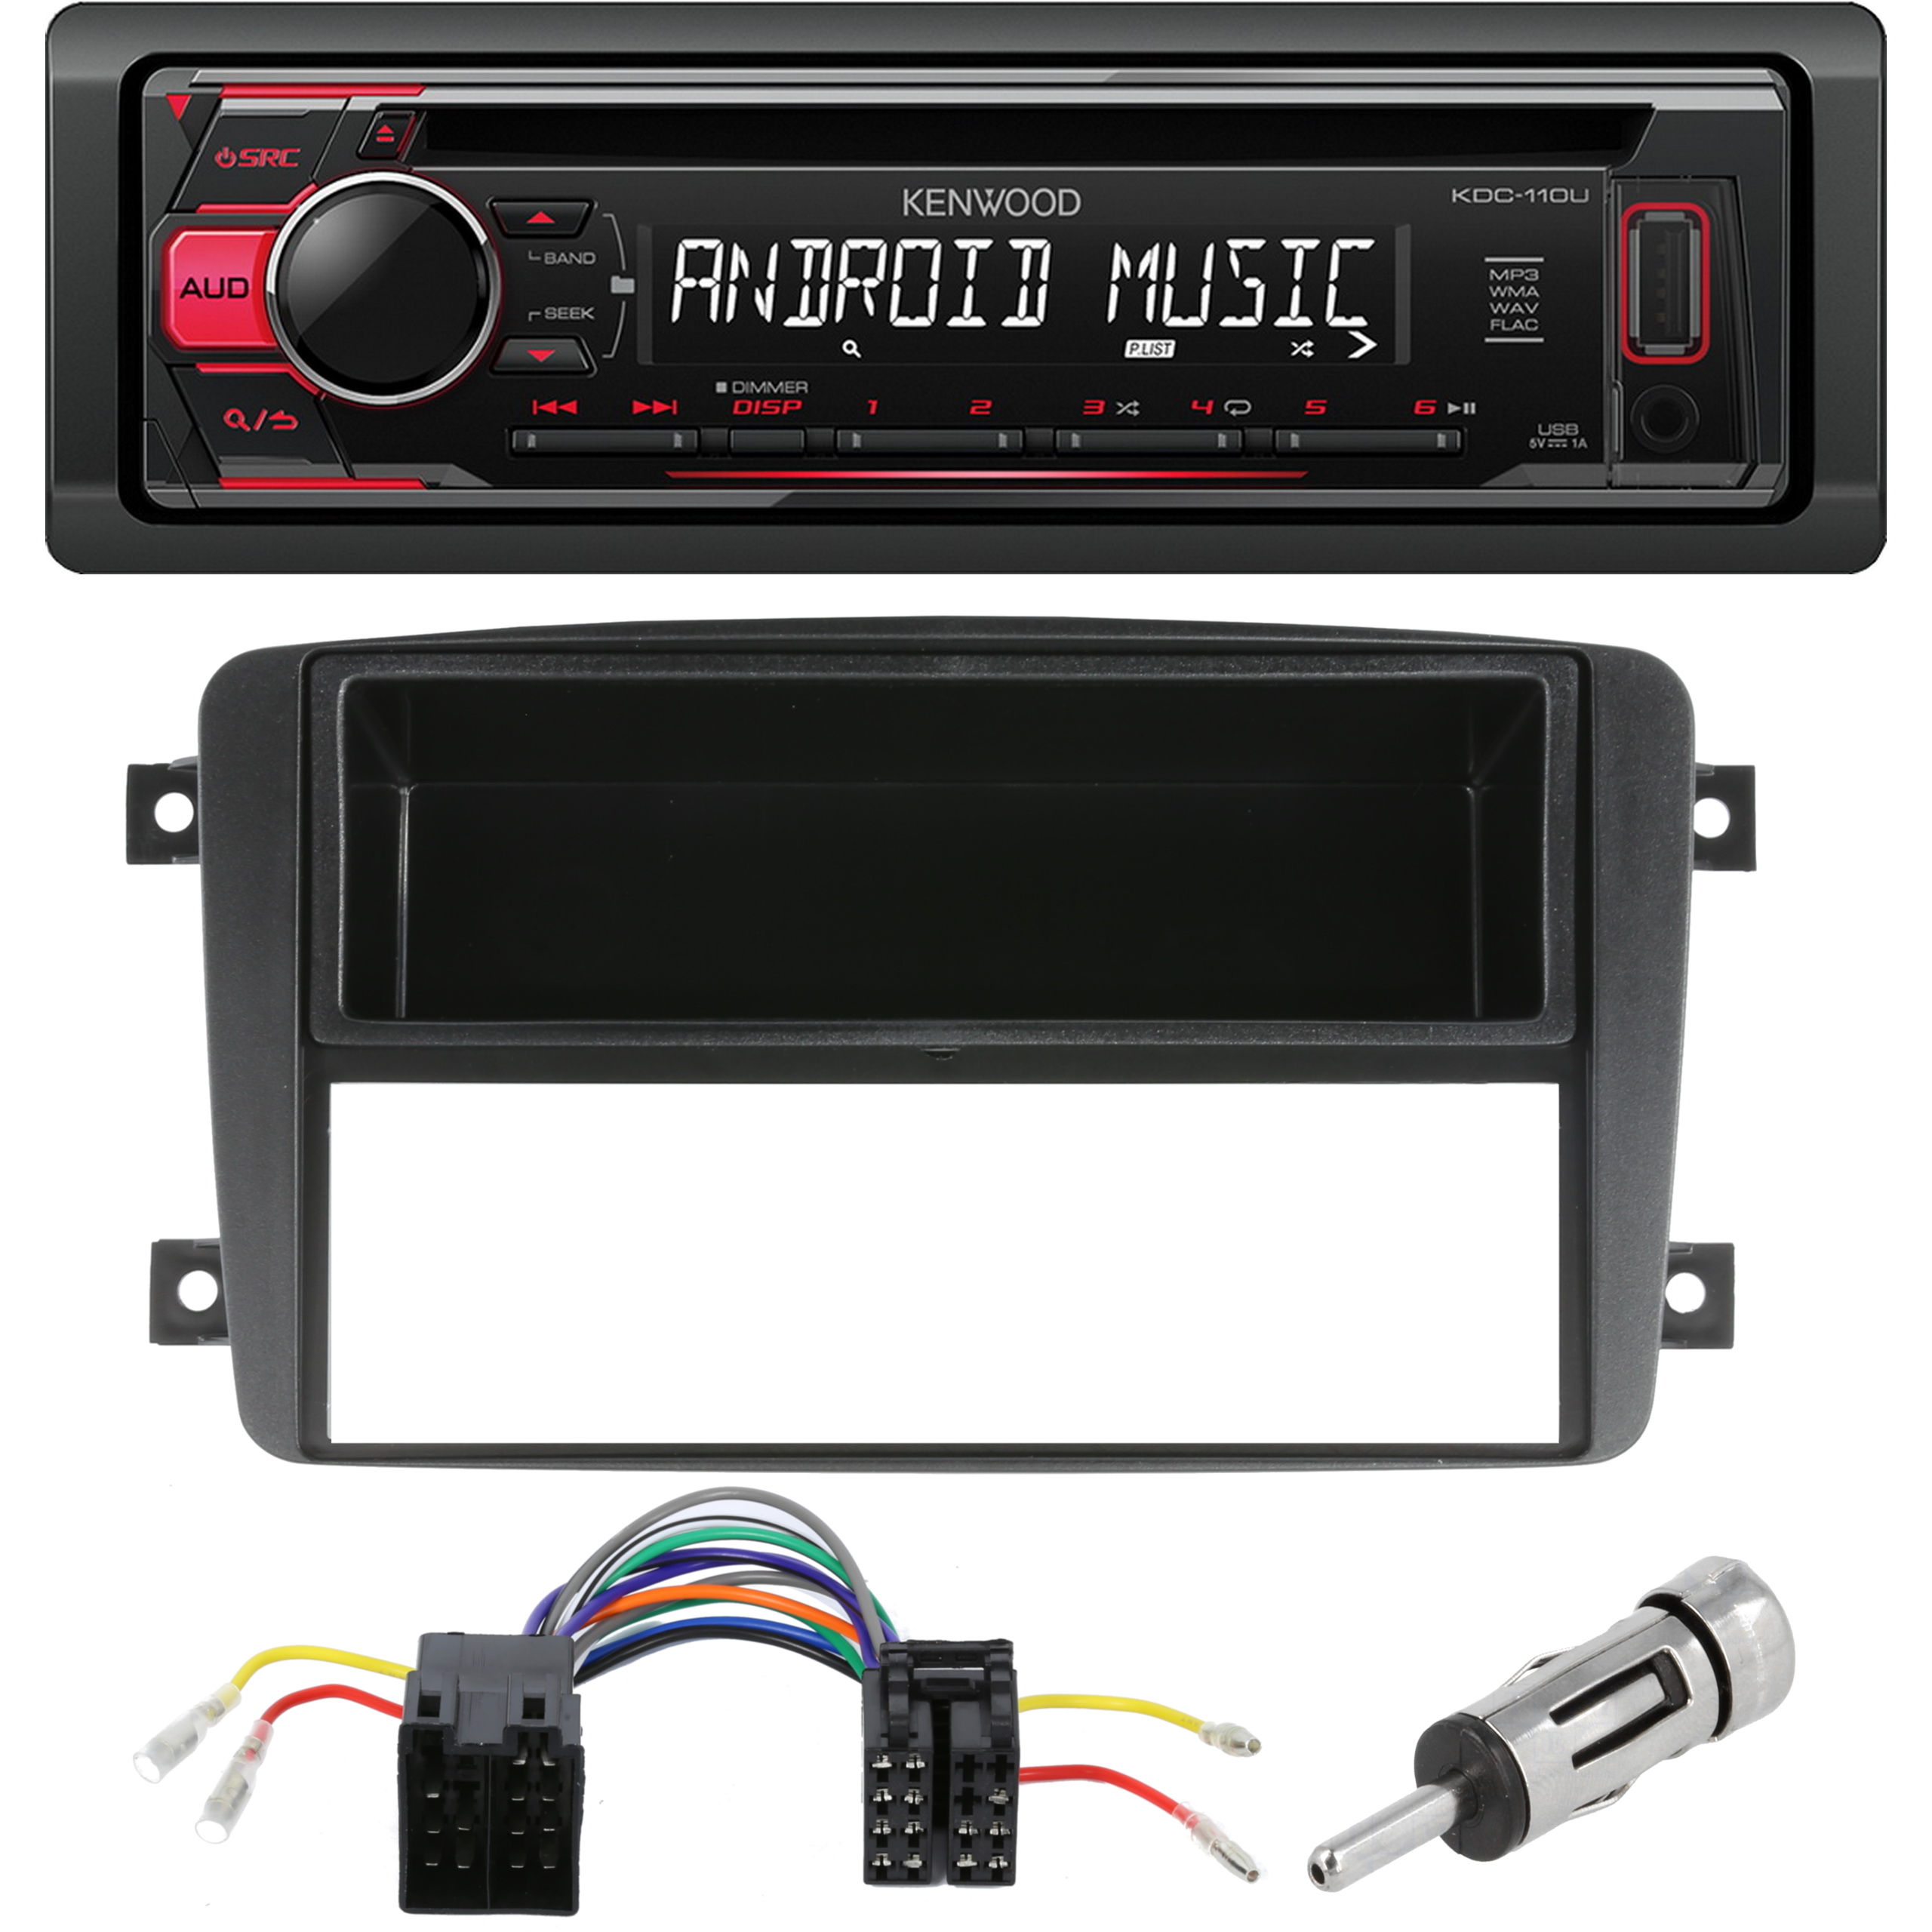 KENWOOD RADIO CD MP3 USB AUX MERCEDES E W210 W163